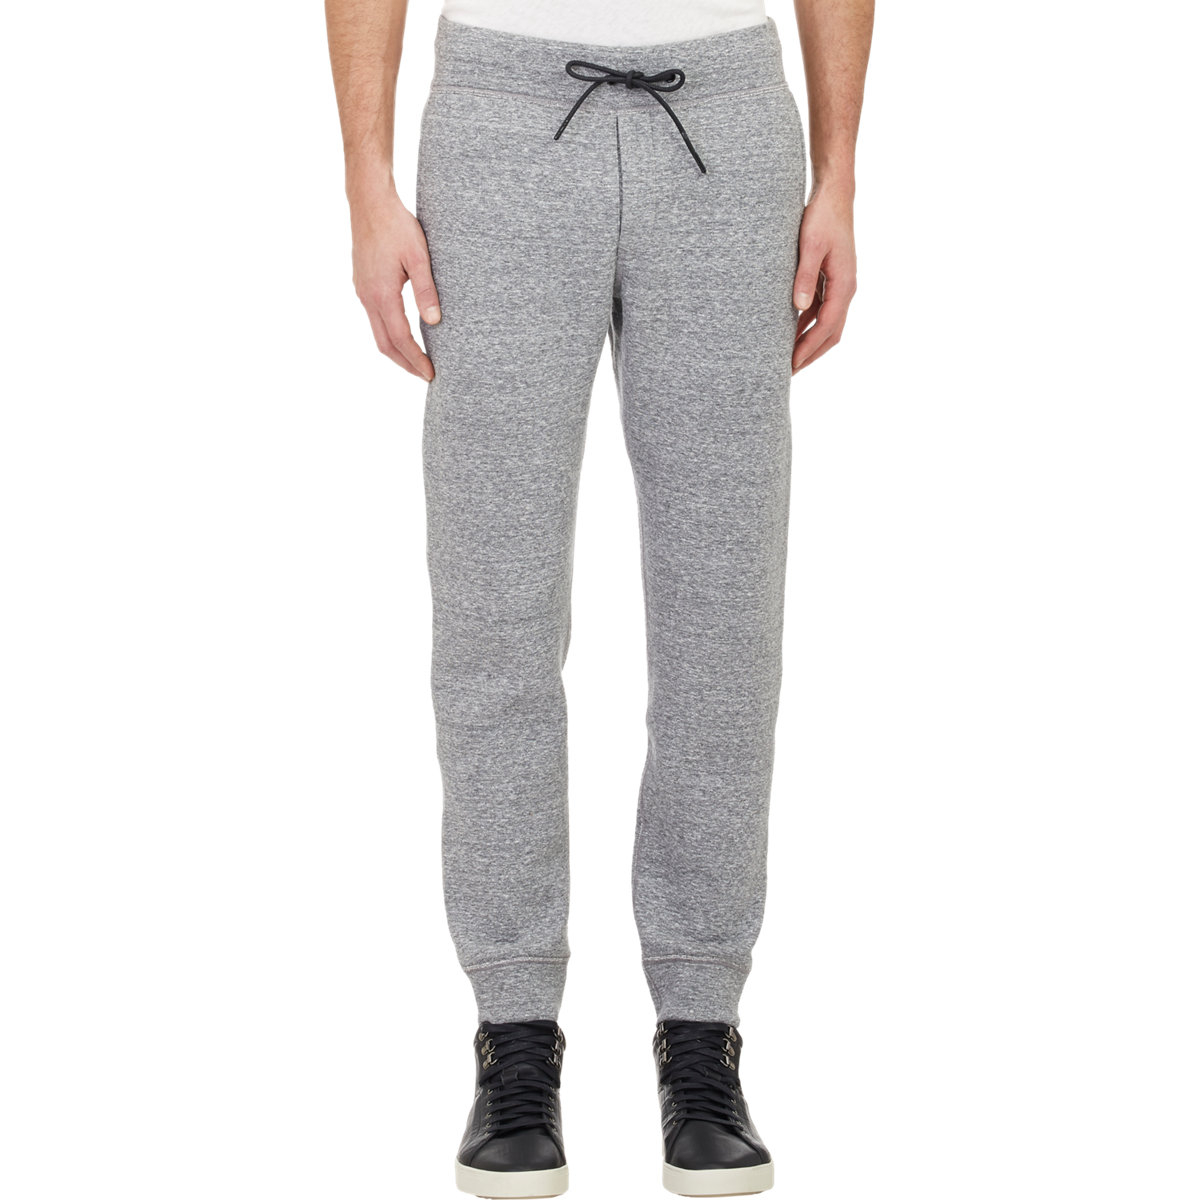 Lyst - Rag & Bone Mélange Fleece Sweatpants in Gray for Men